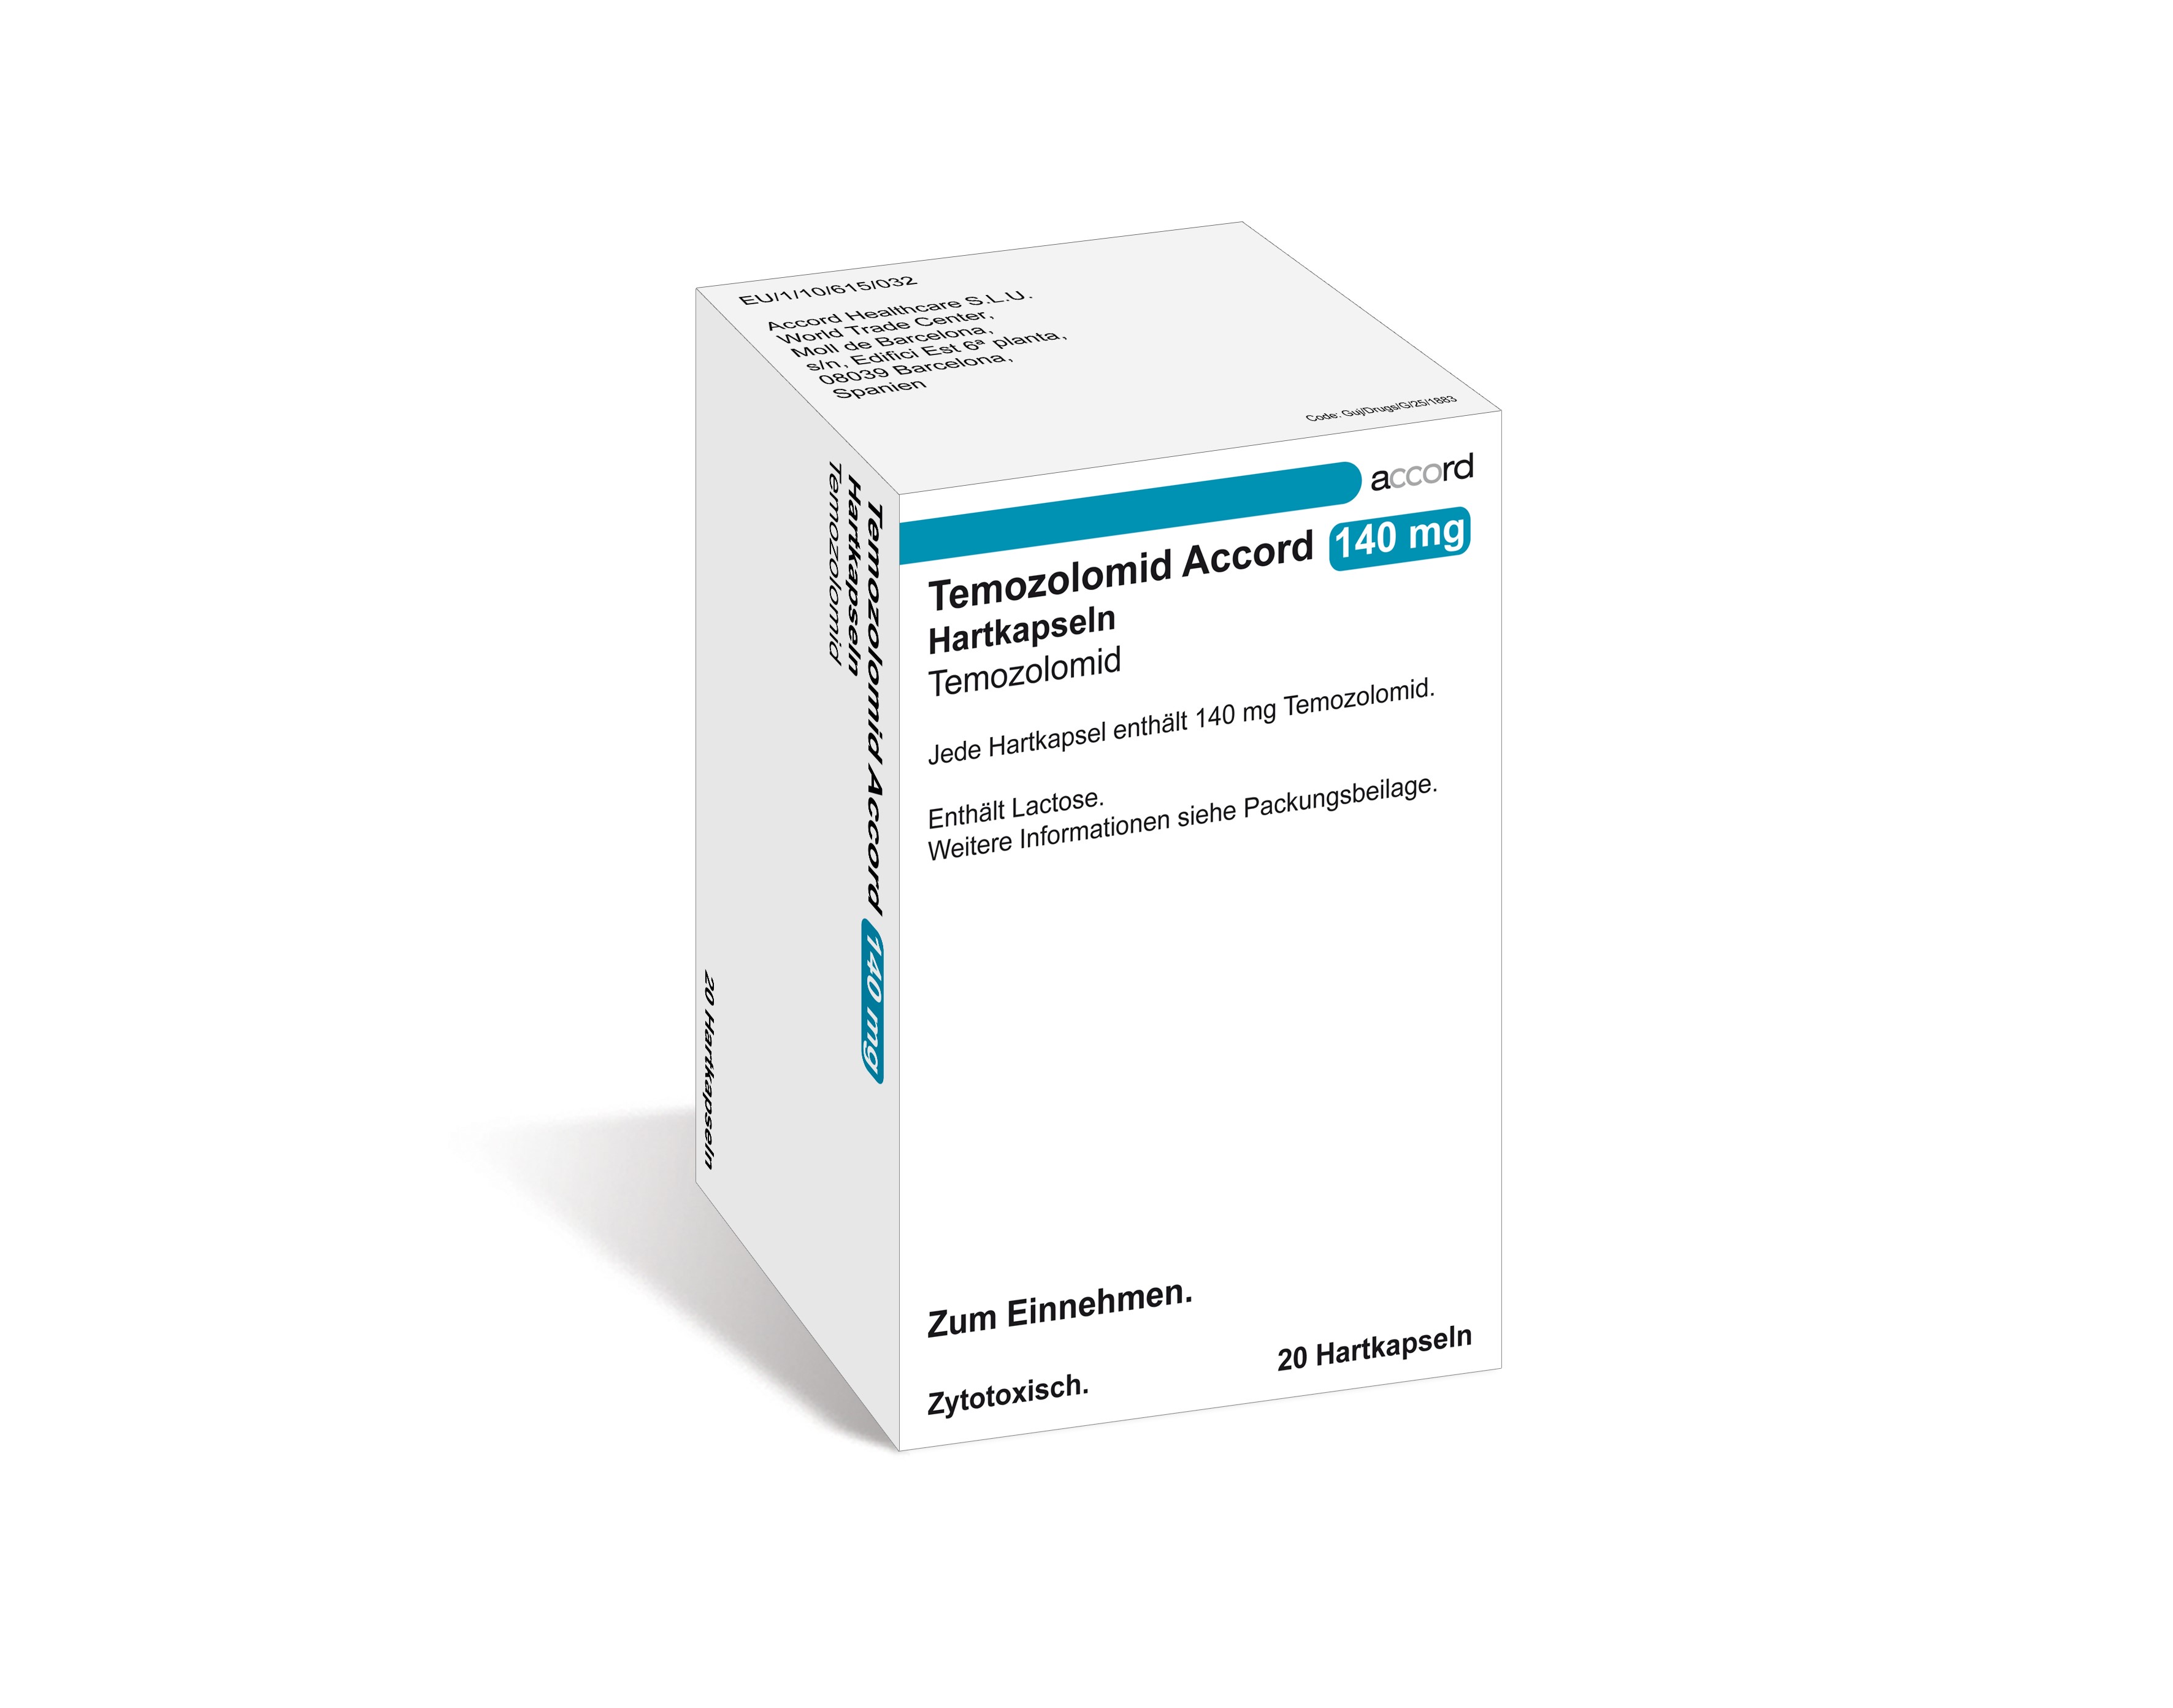 Accord Packshot Temozolomid 140 mg